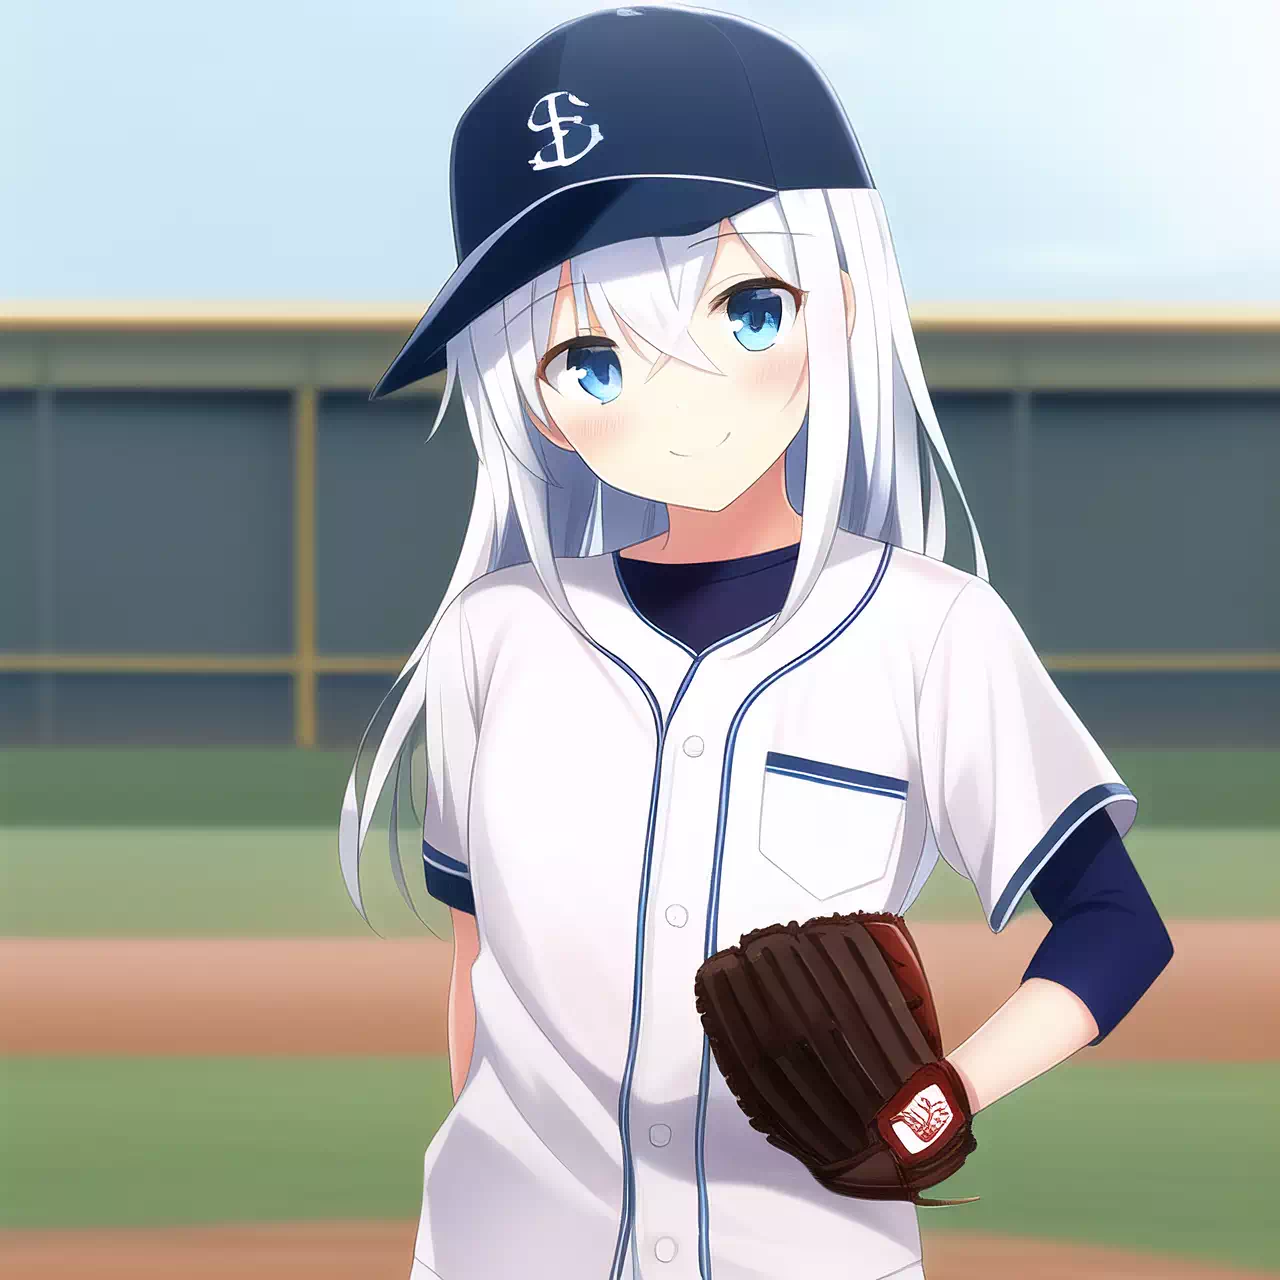 Hibiki plays baseball!